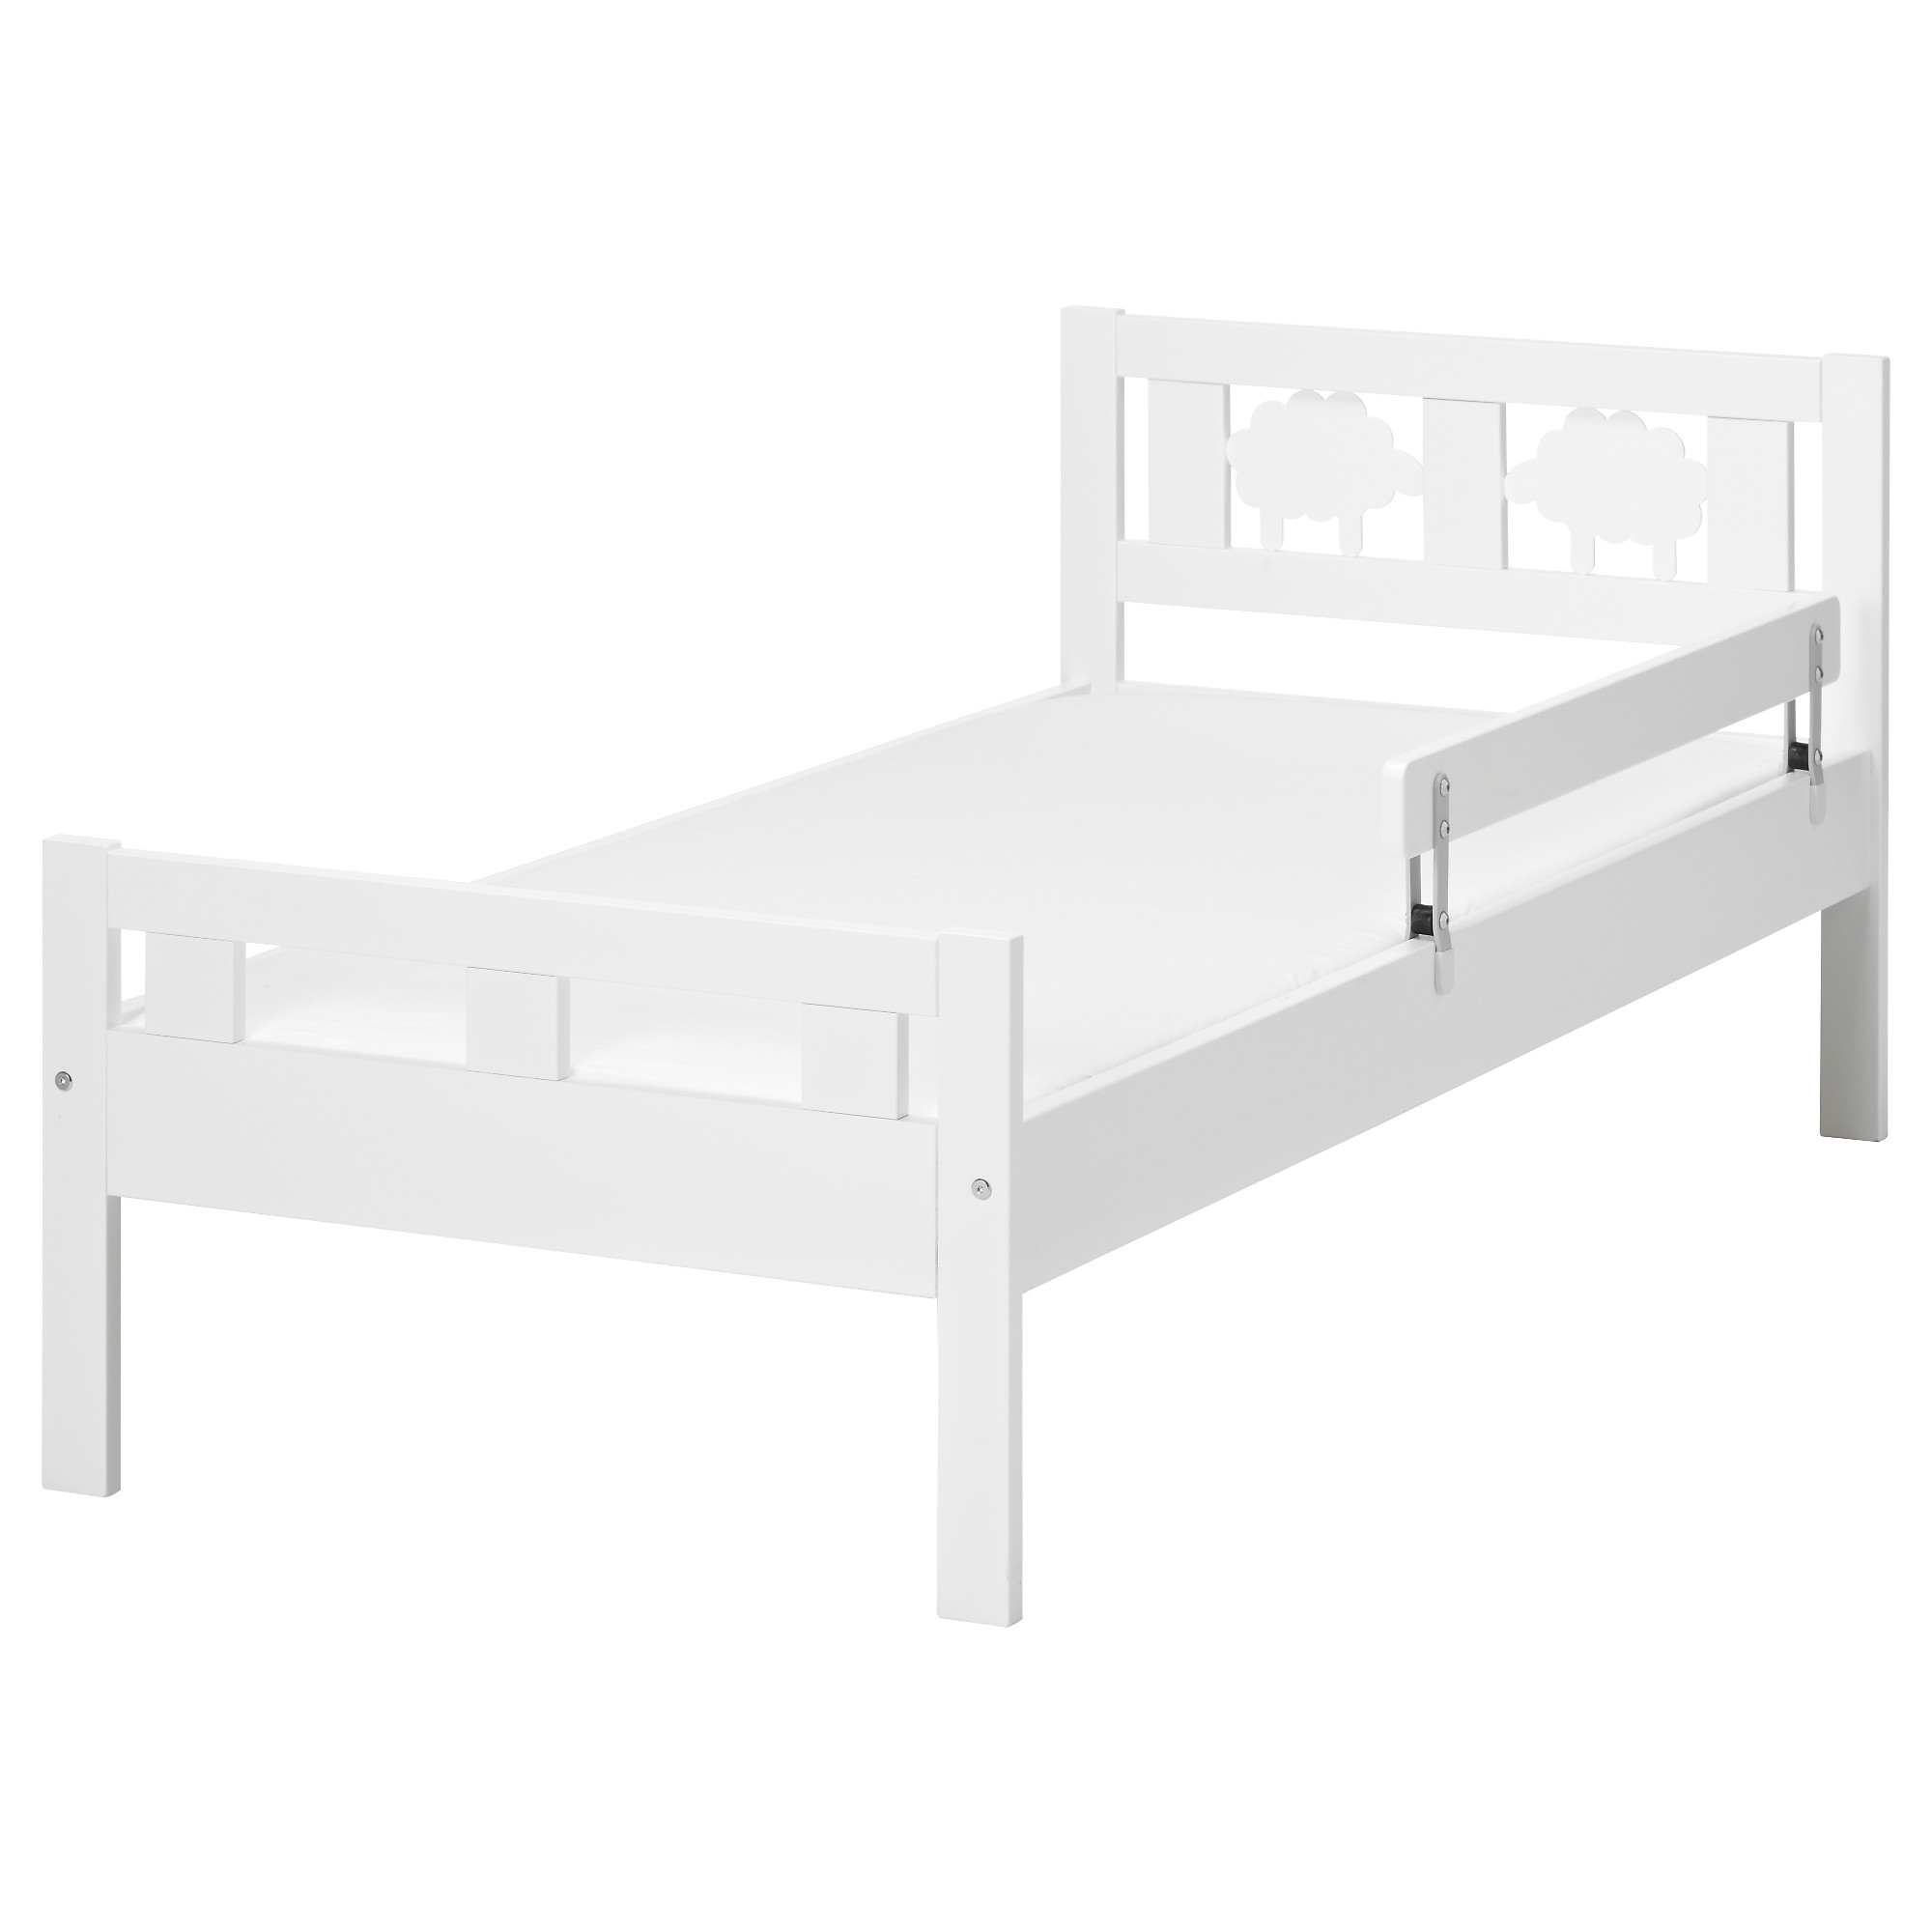 Salie Liever Erfgenaam KRITTER - bed frame and guard rail, white | IKEA Hong Kong and Macau